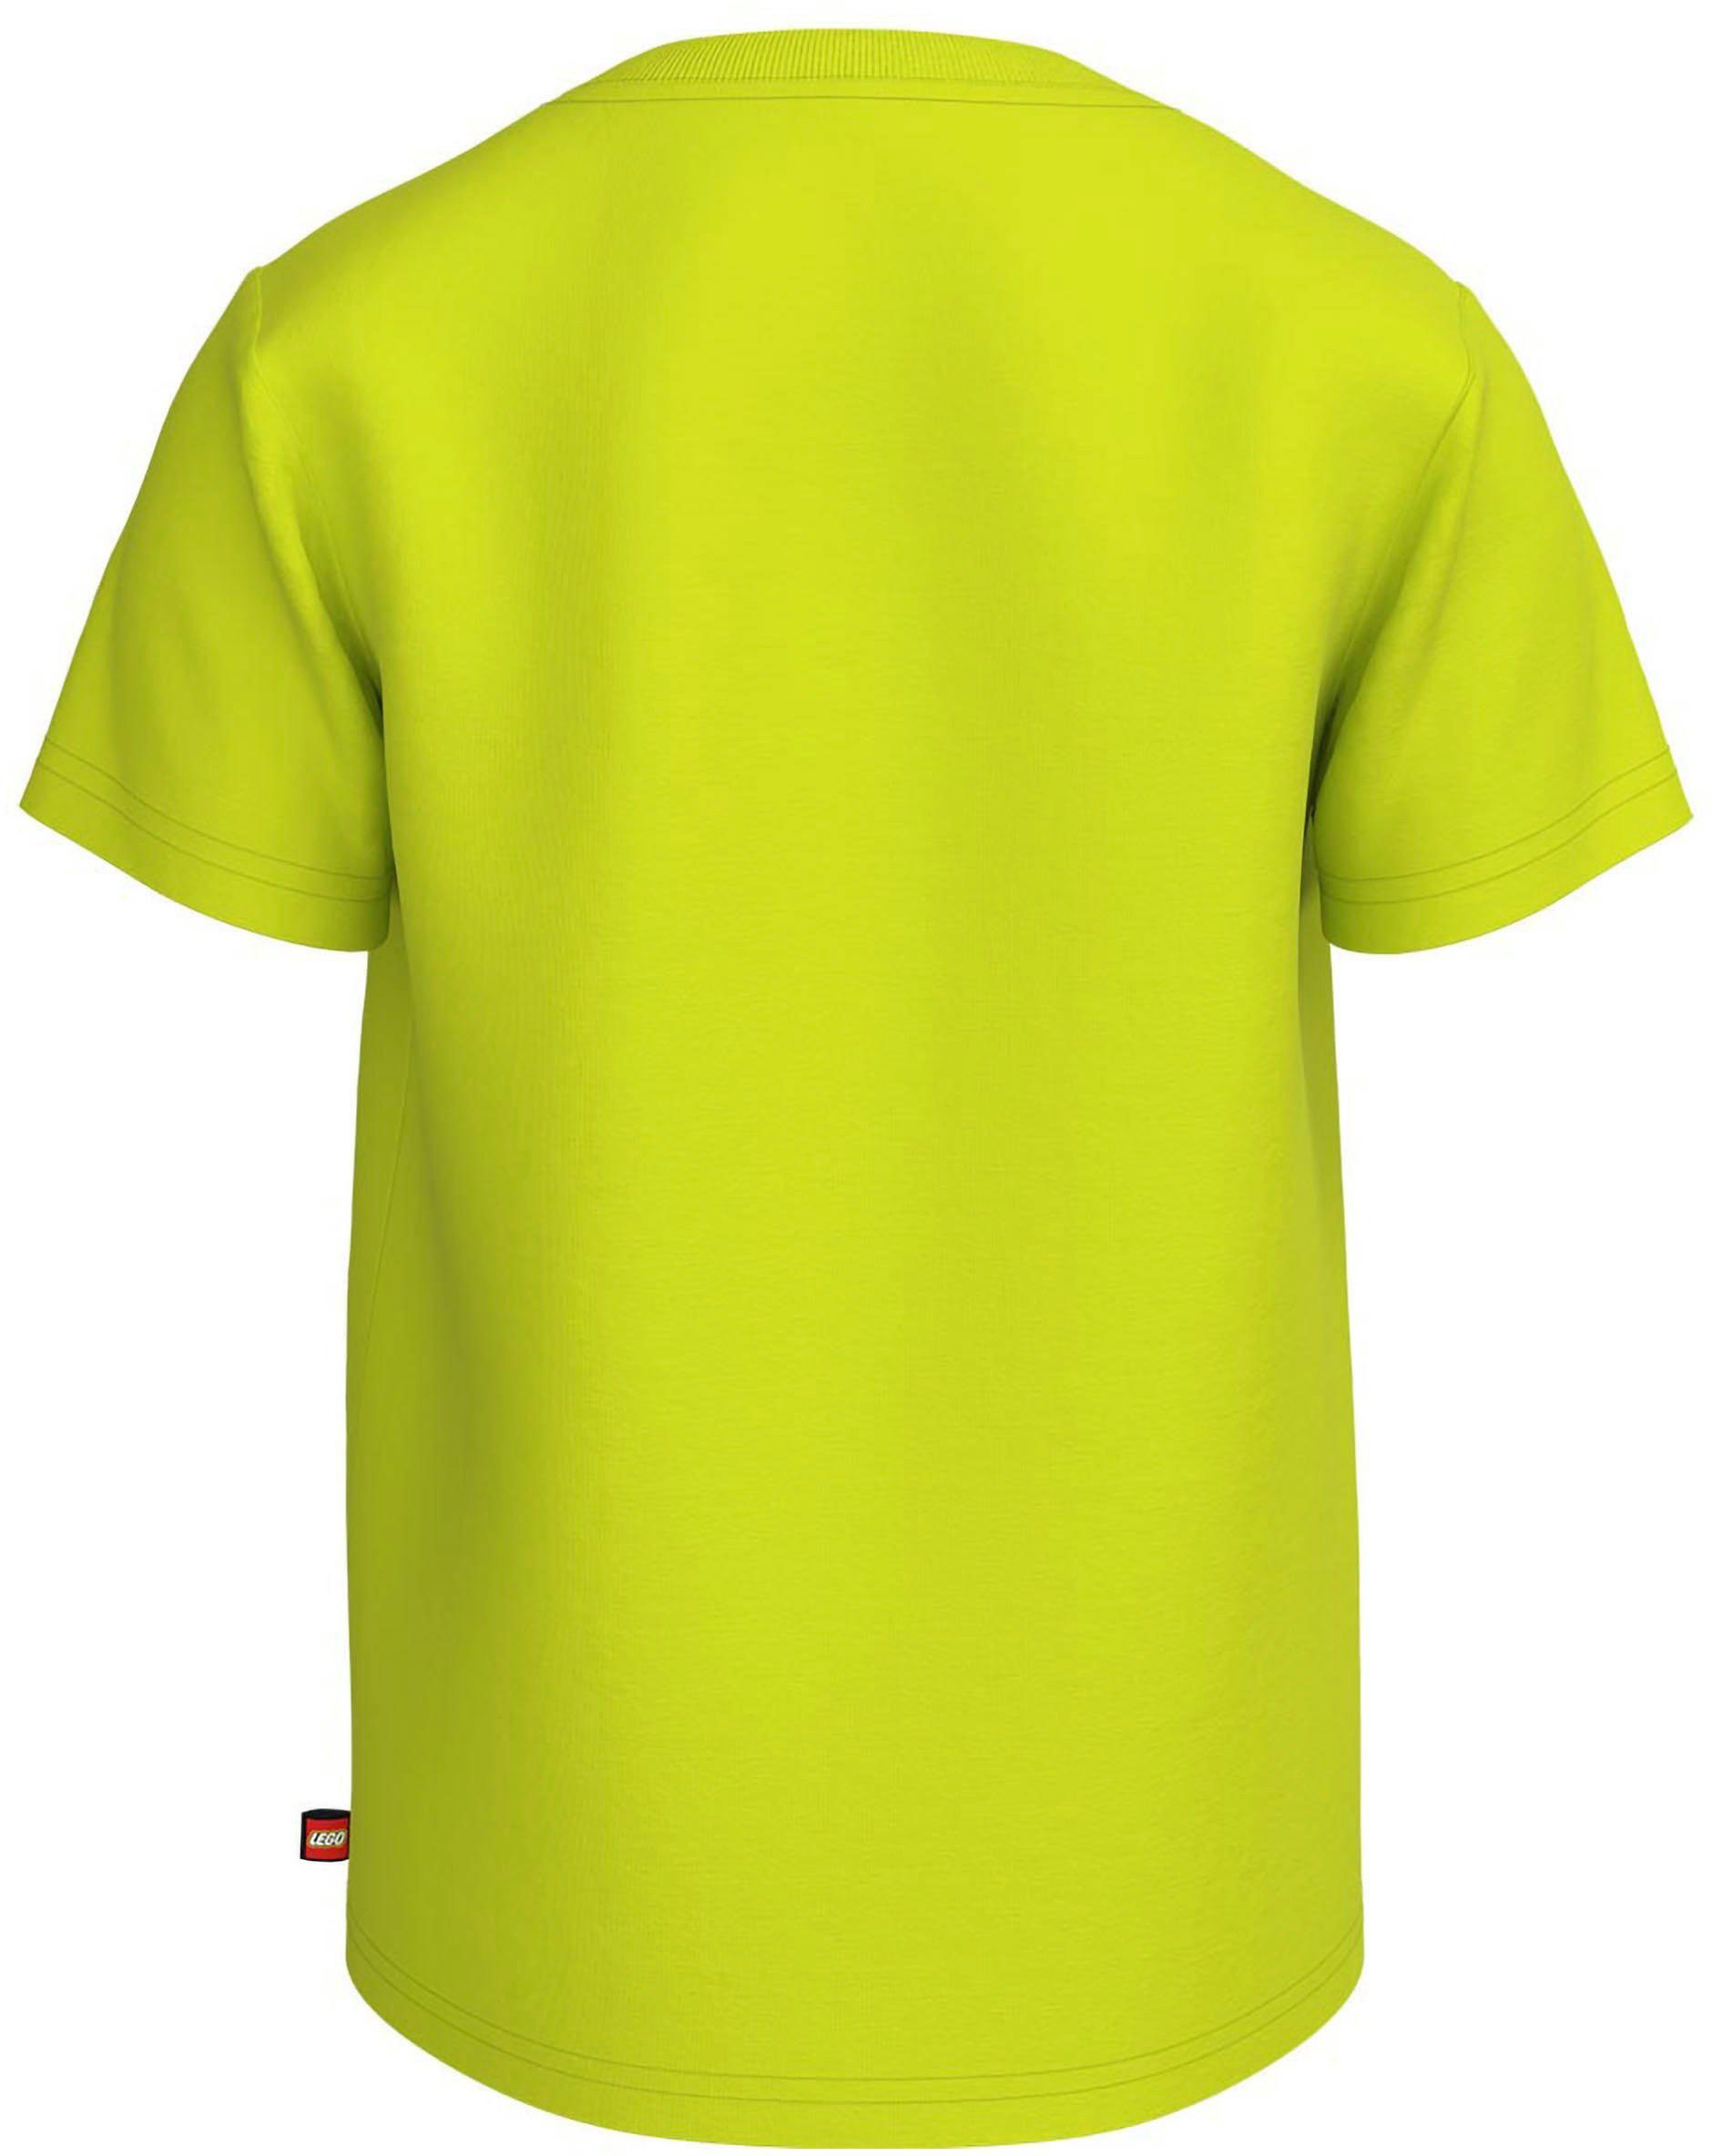 Print-Shirt lime Wear green LEGO®